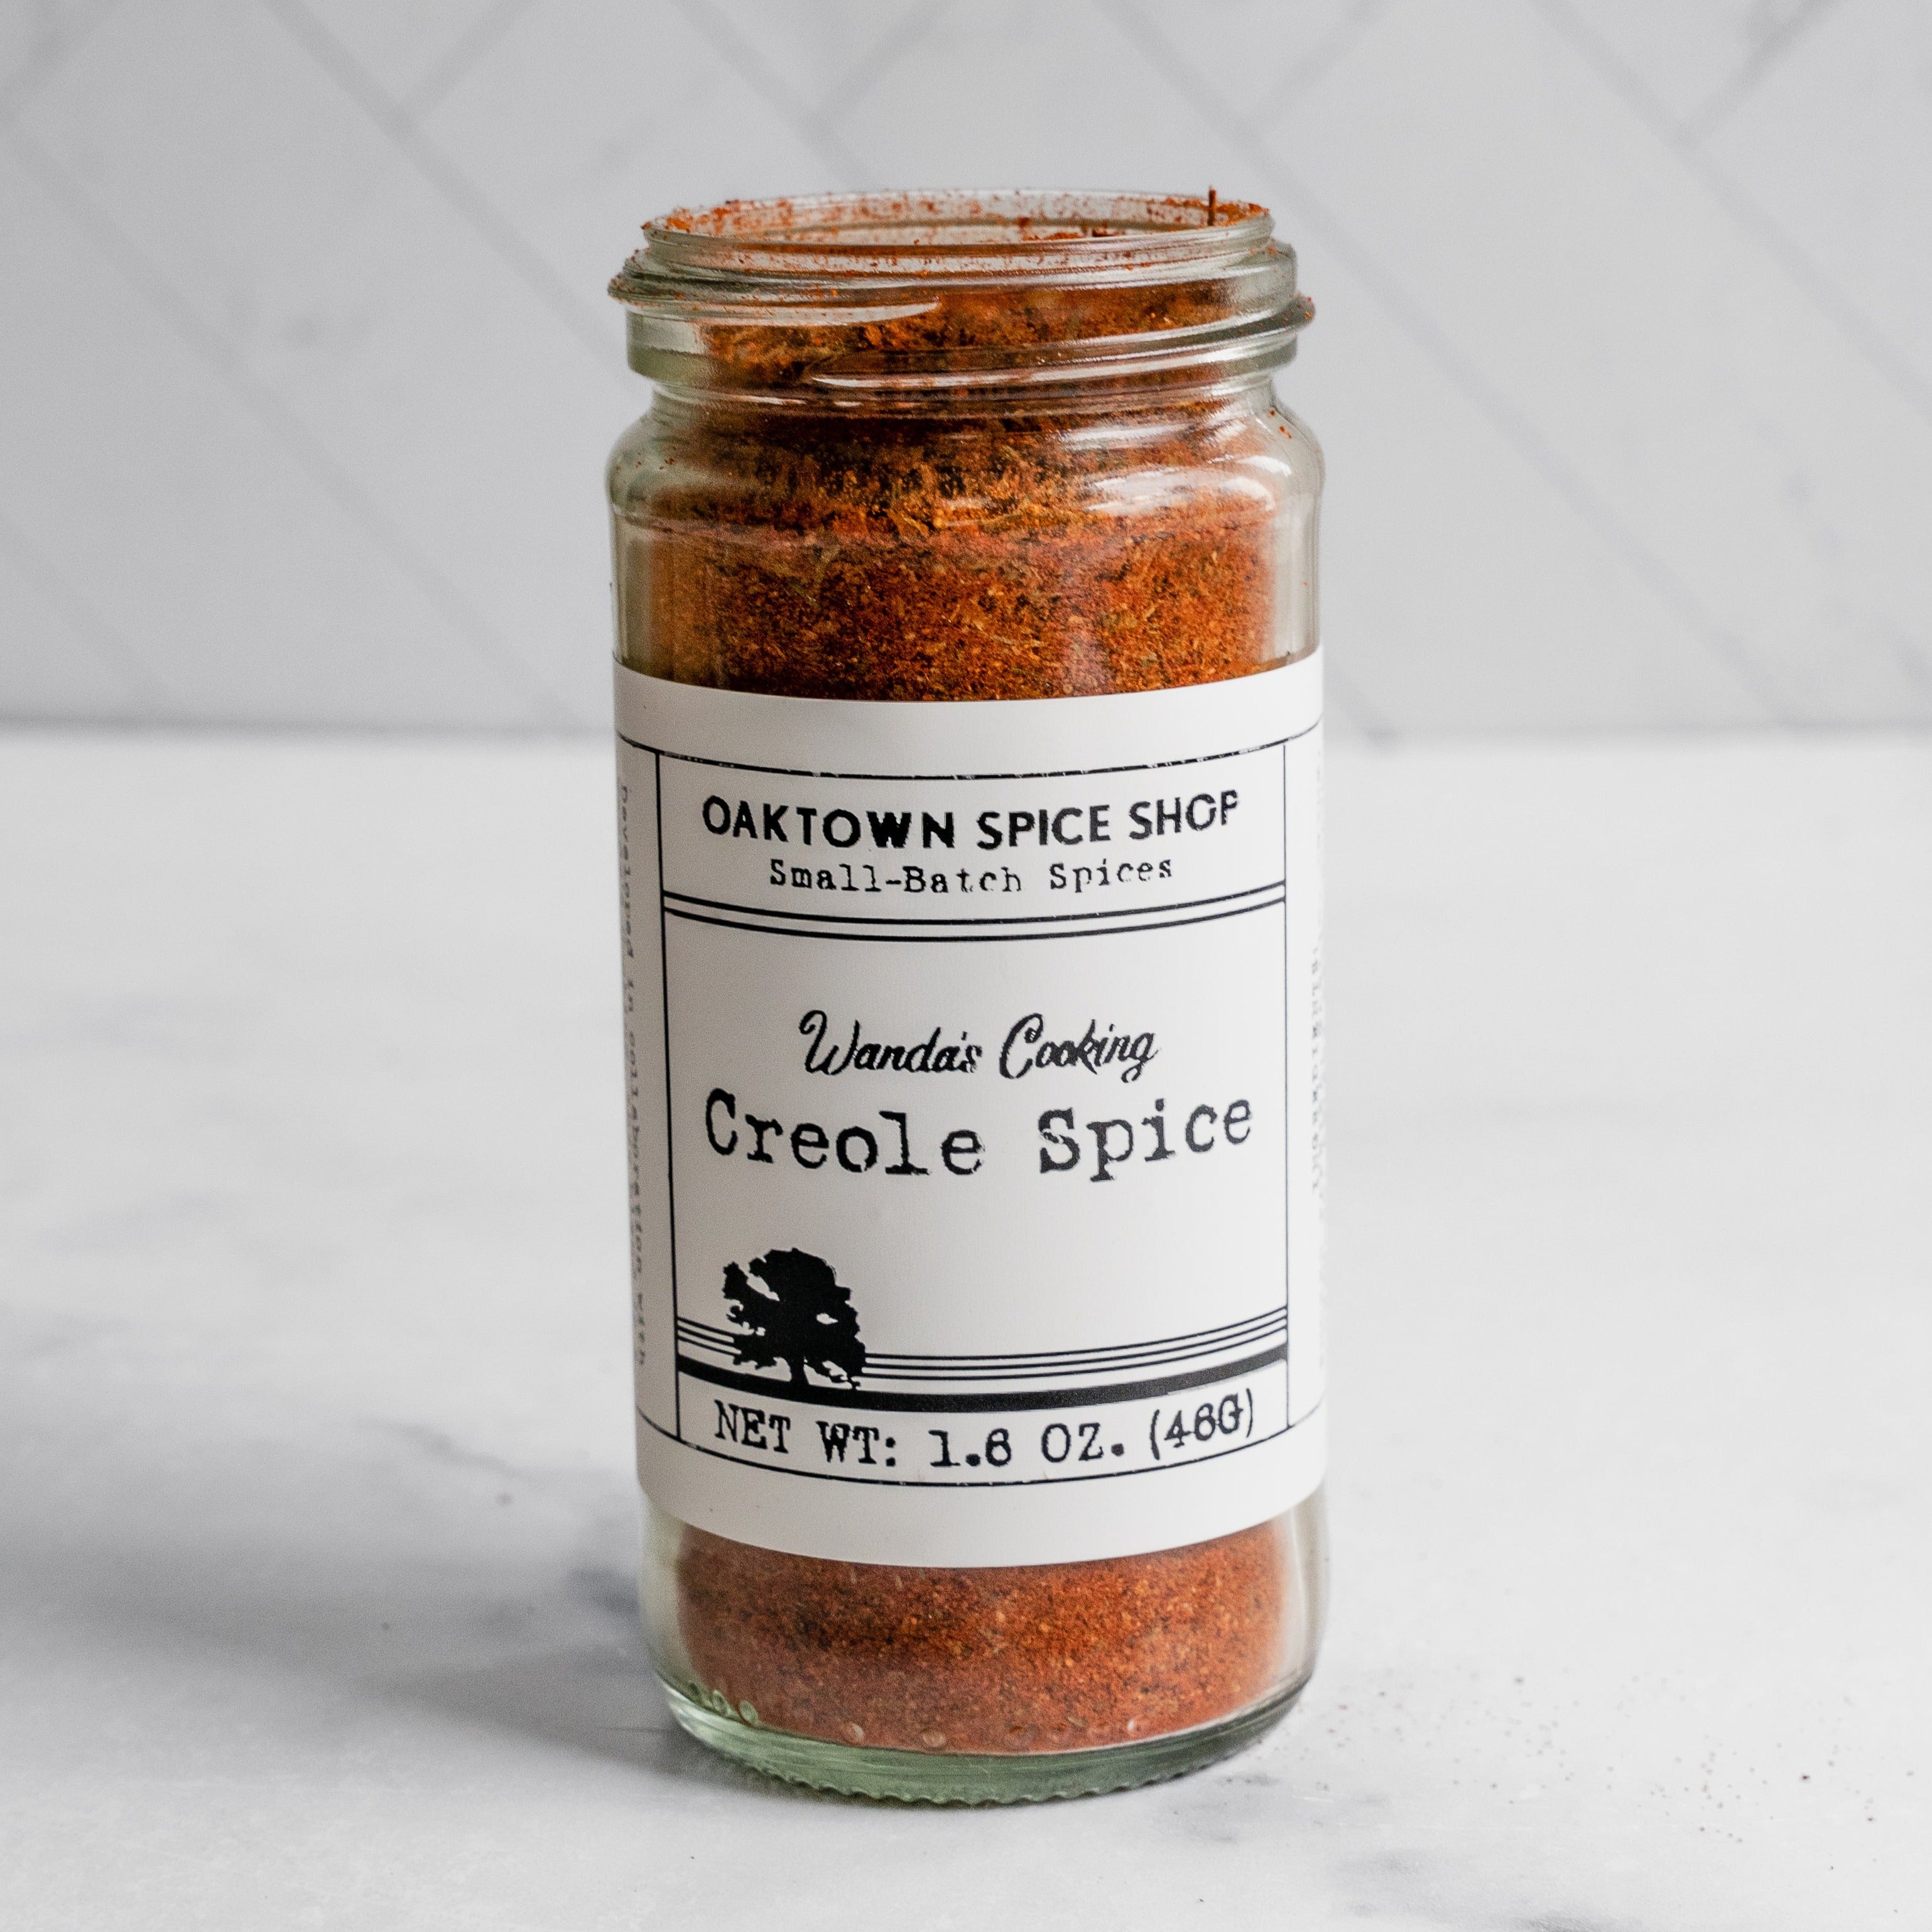 Creole Spice